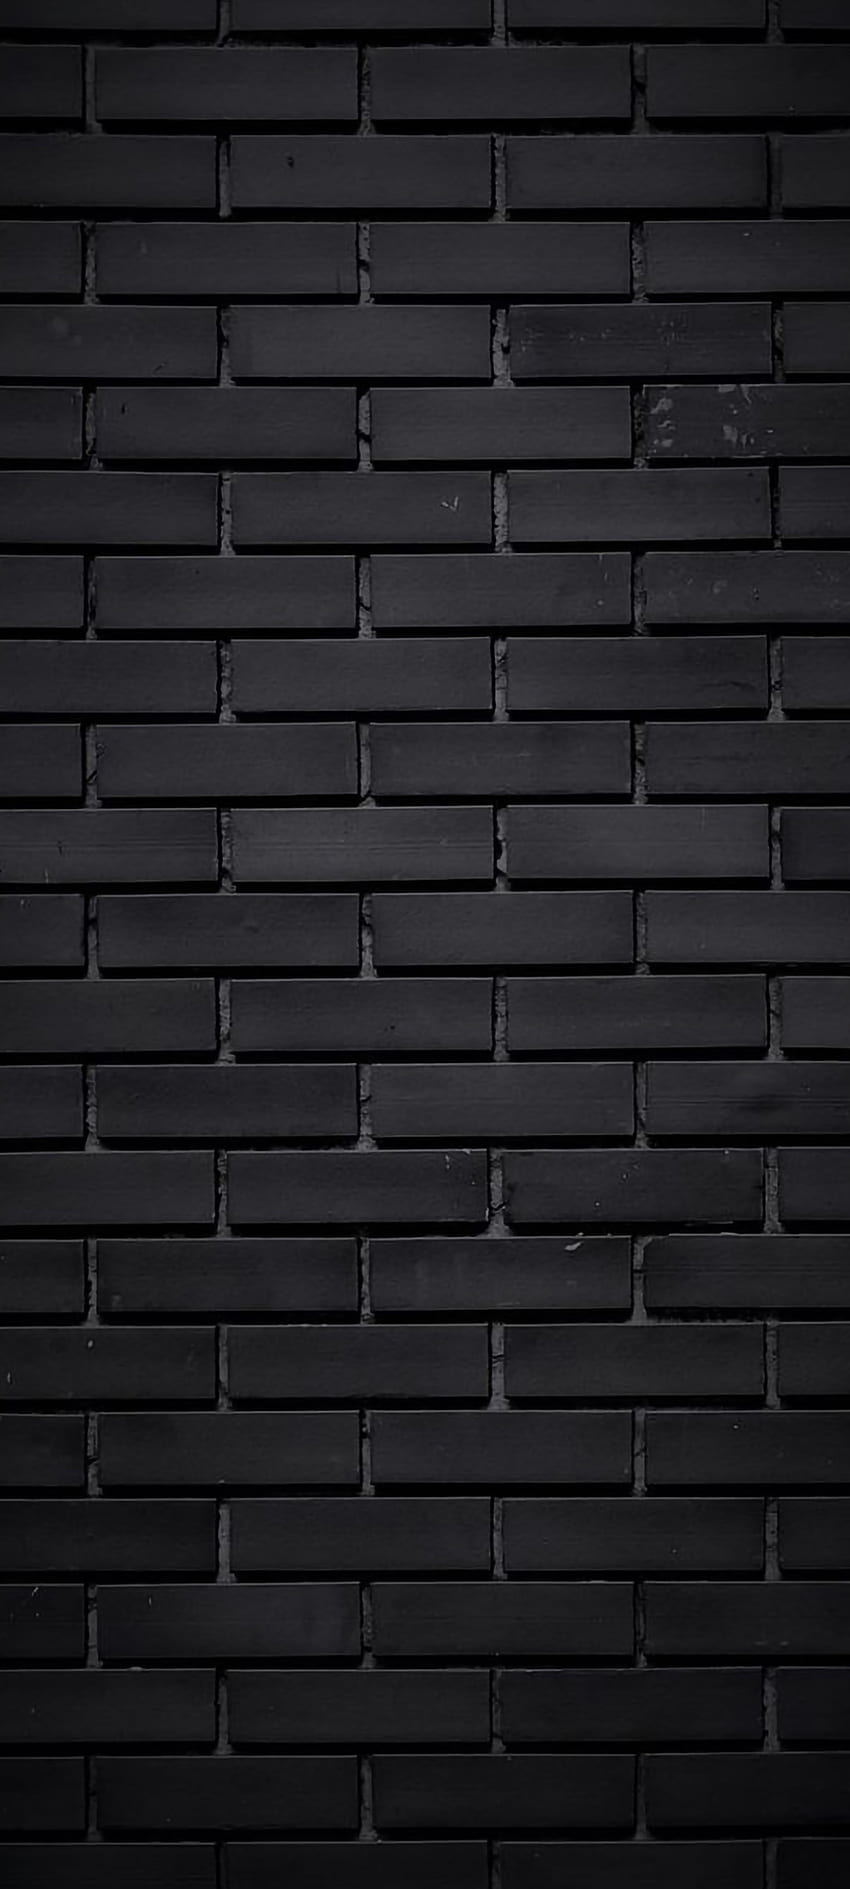 686978 Black Brick Wall Images Stock Photos  Vectors  Shutterstock